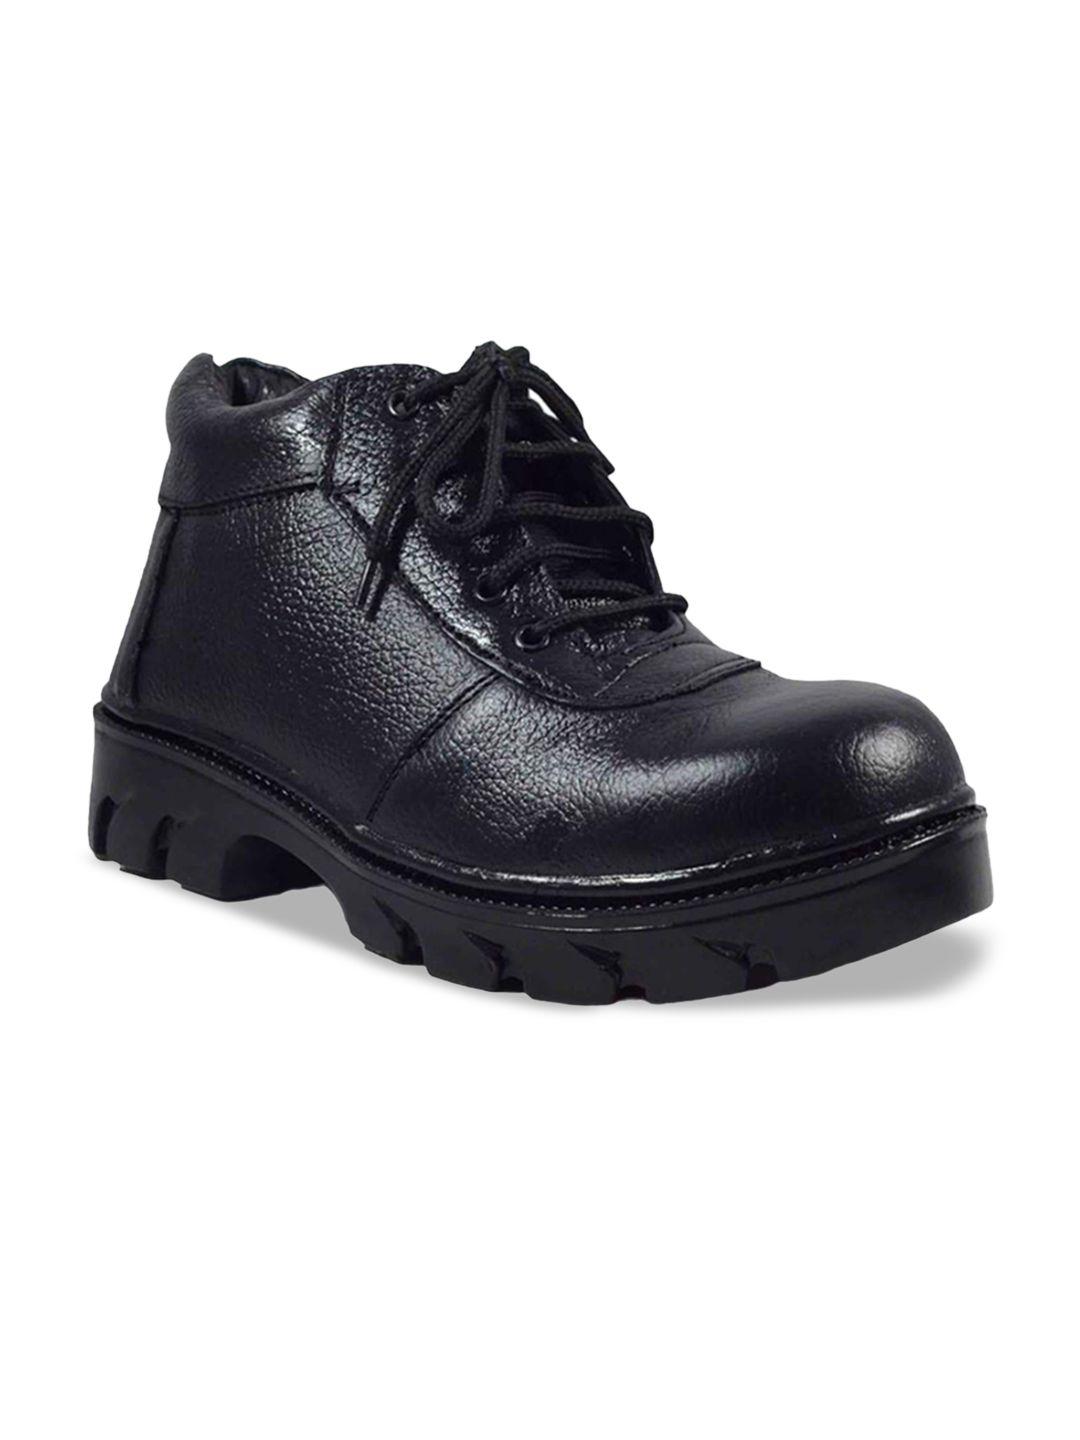 imcolus men block heeled regular boots